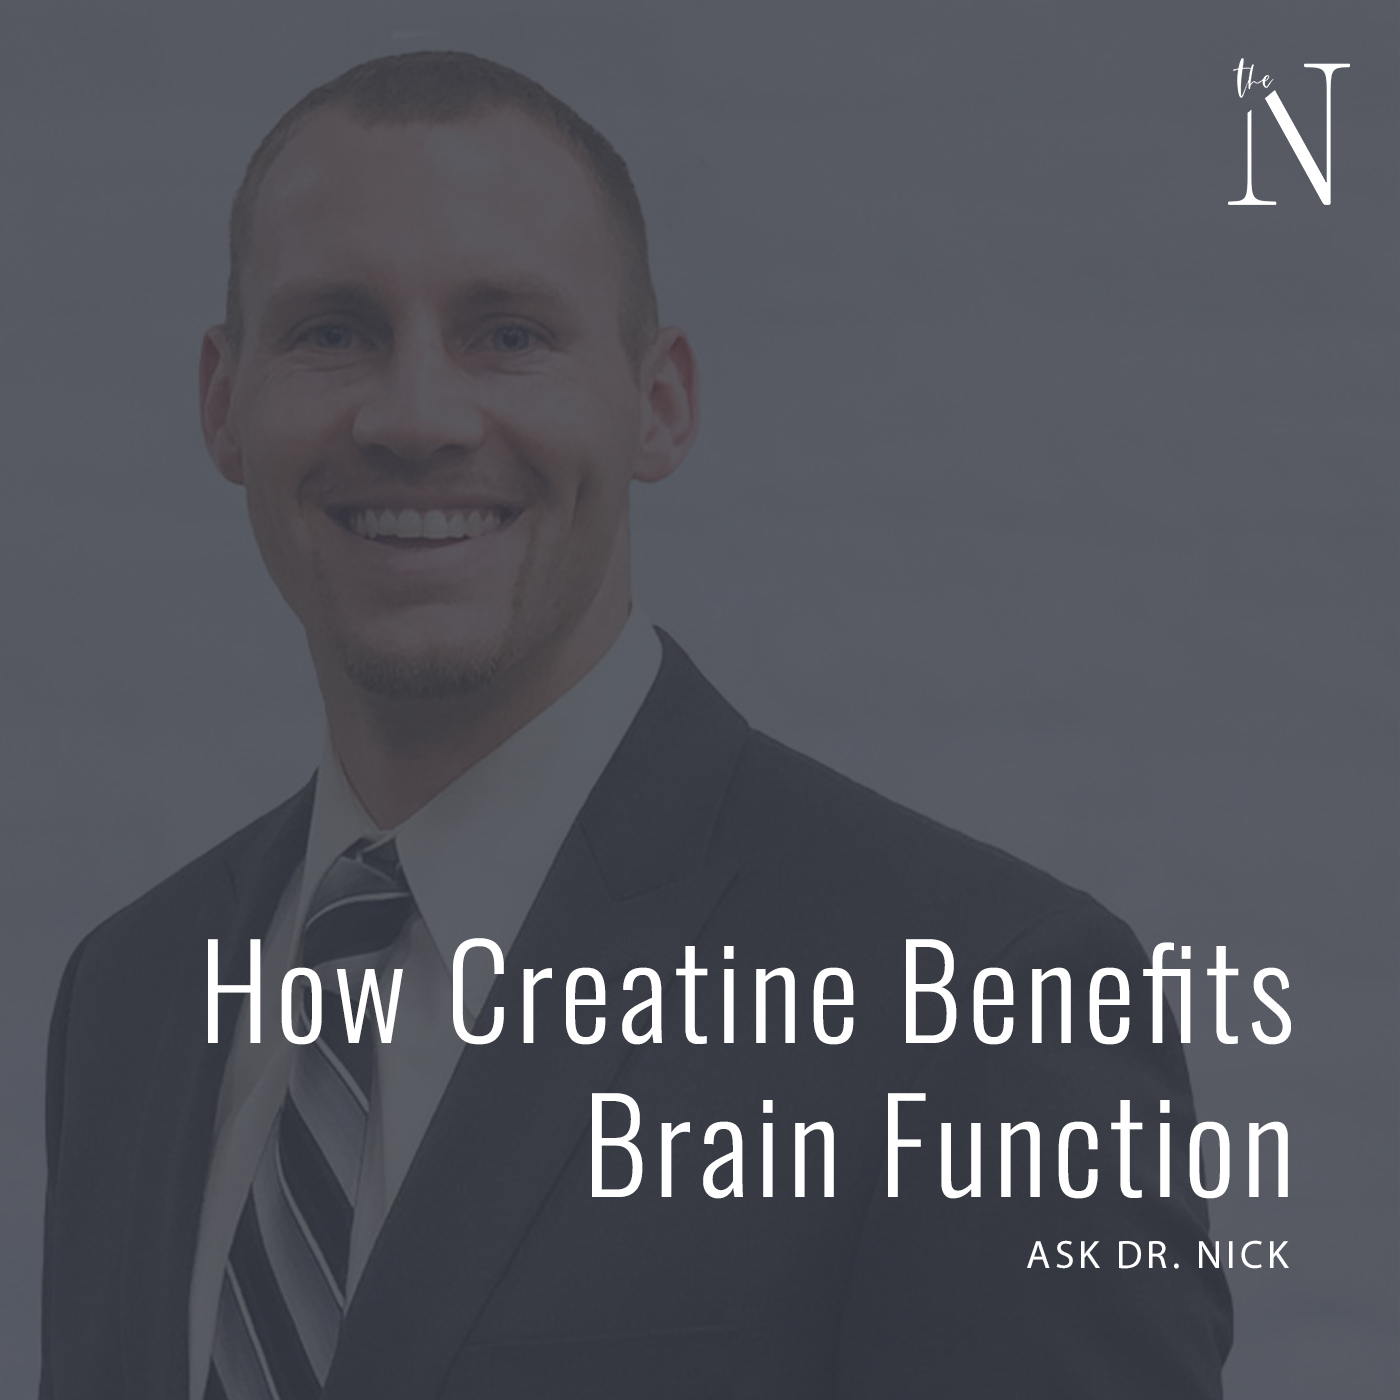 How Creatine Benefits Brain Function